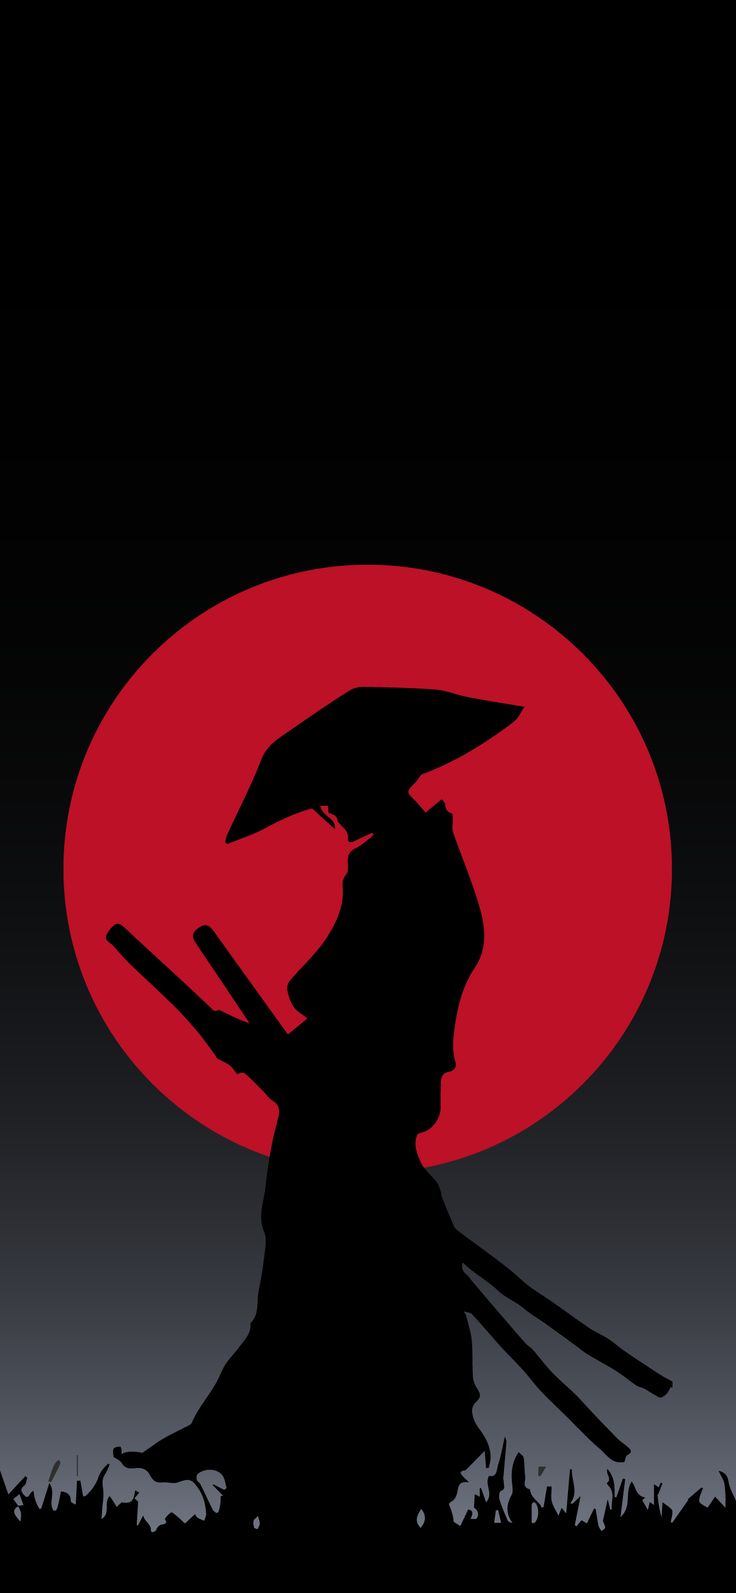 A poster with the silhouette of samurai - Samurai